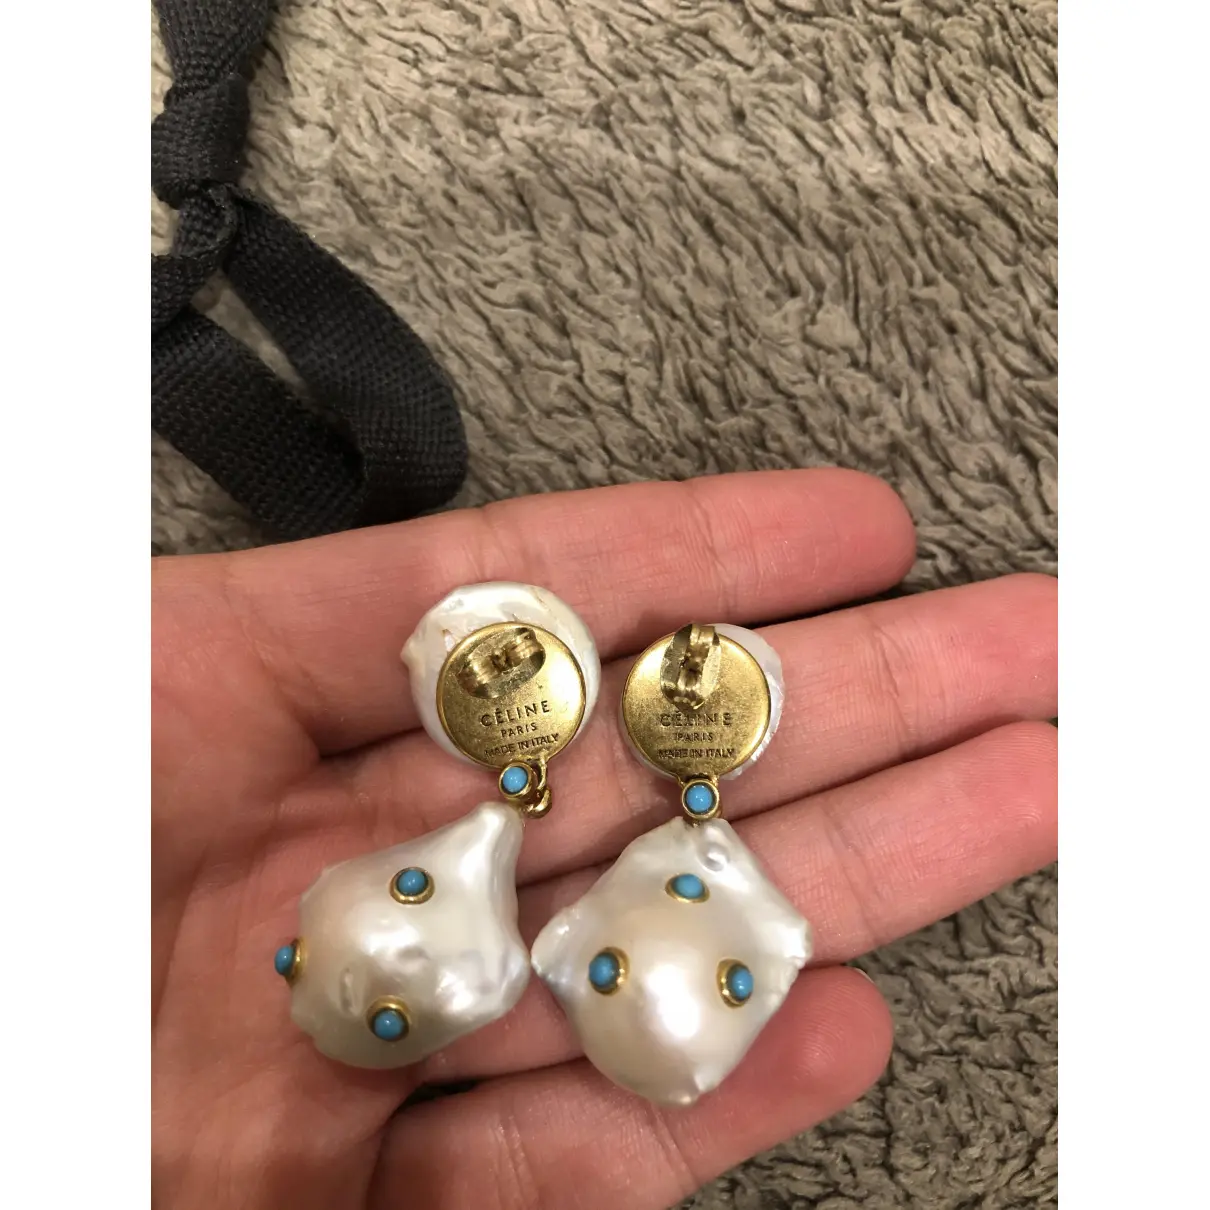 Buy Celine Baroque earrings online